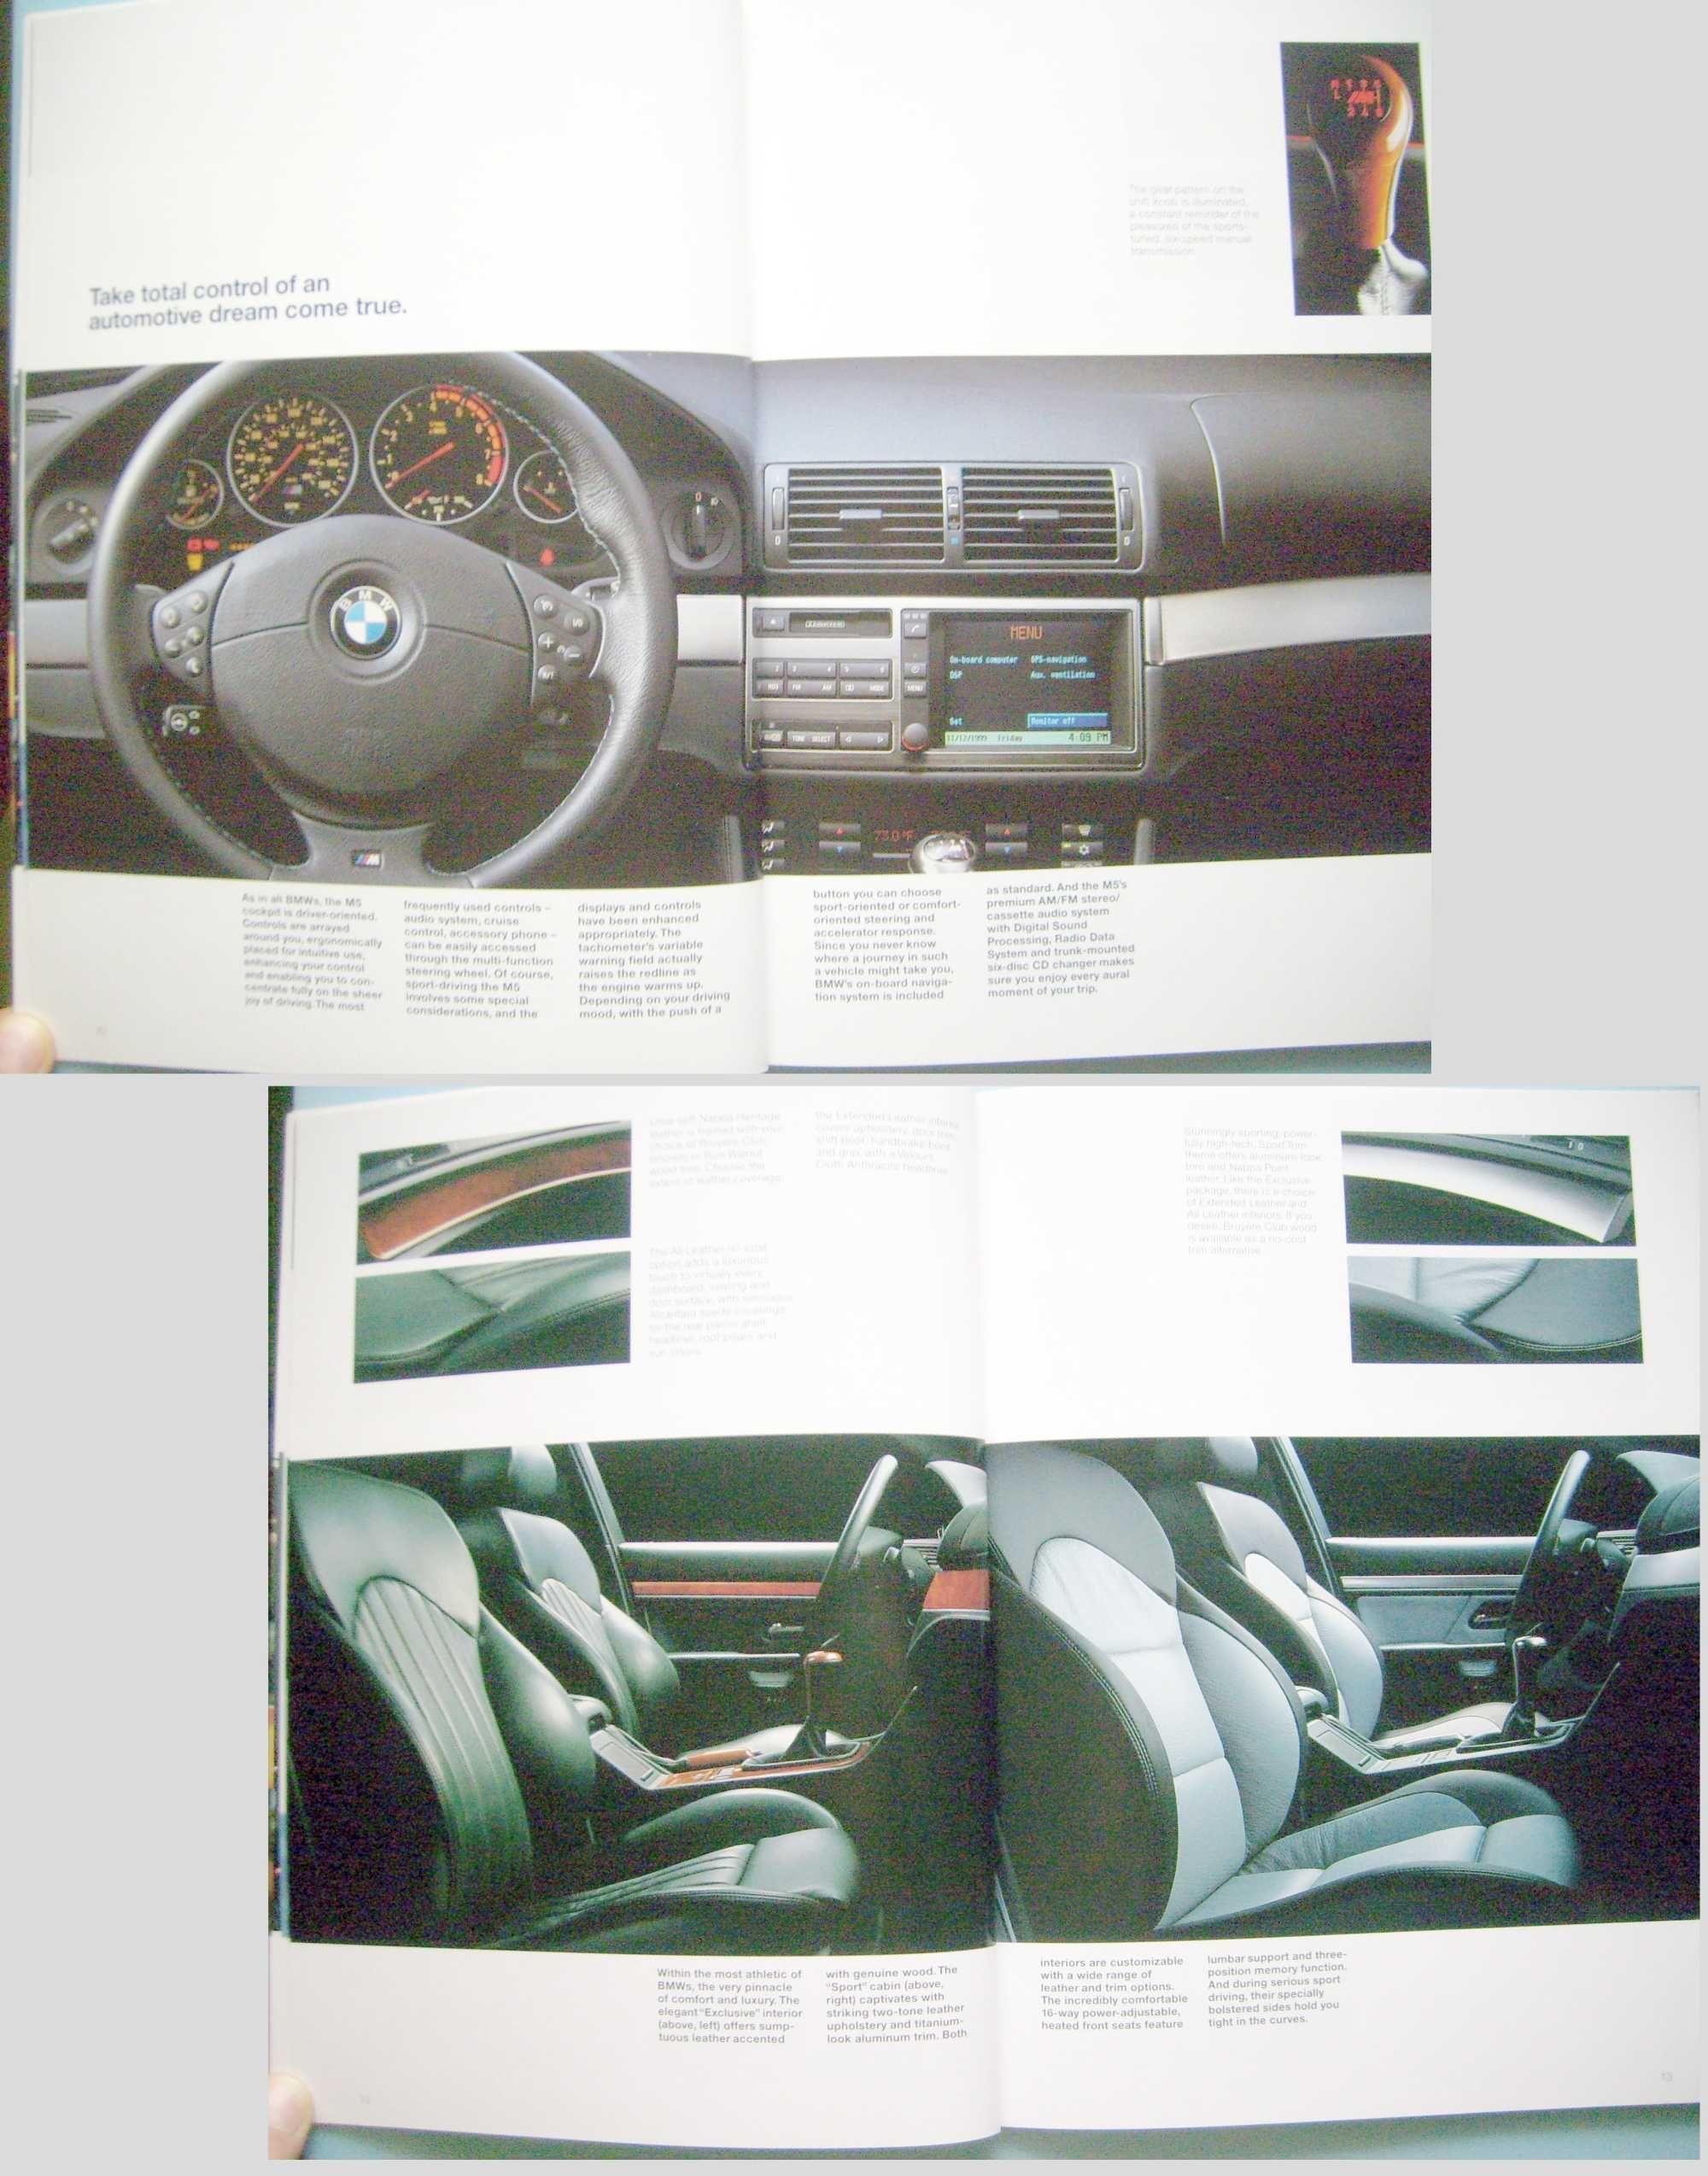 BMW M-Power 'Year 2000' North America * prospekt 48 str. M3 M5 M-Coupe